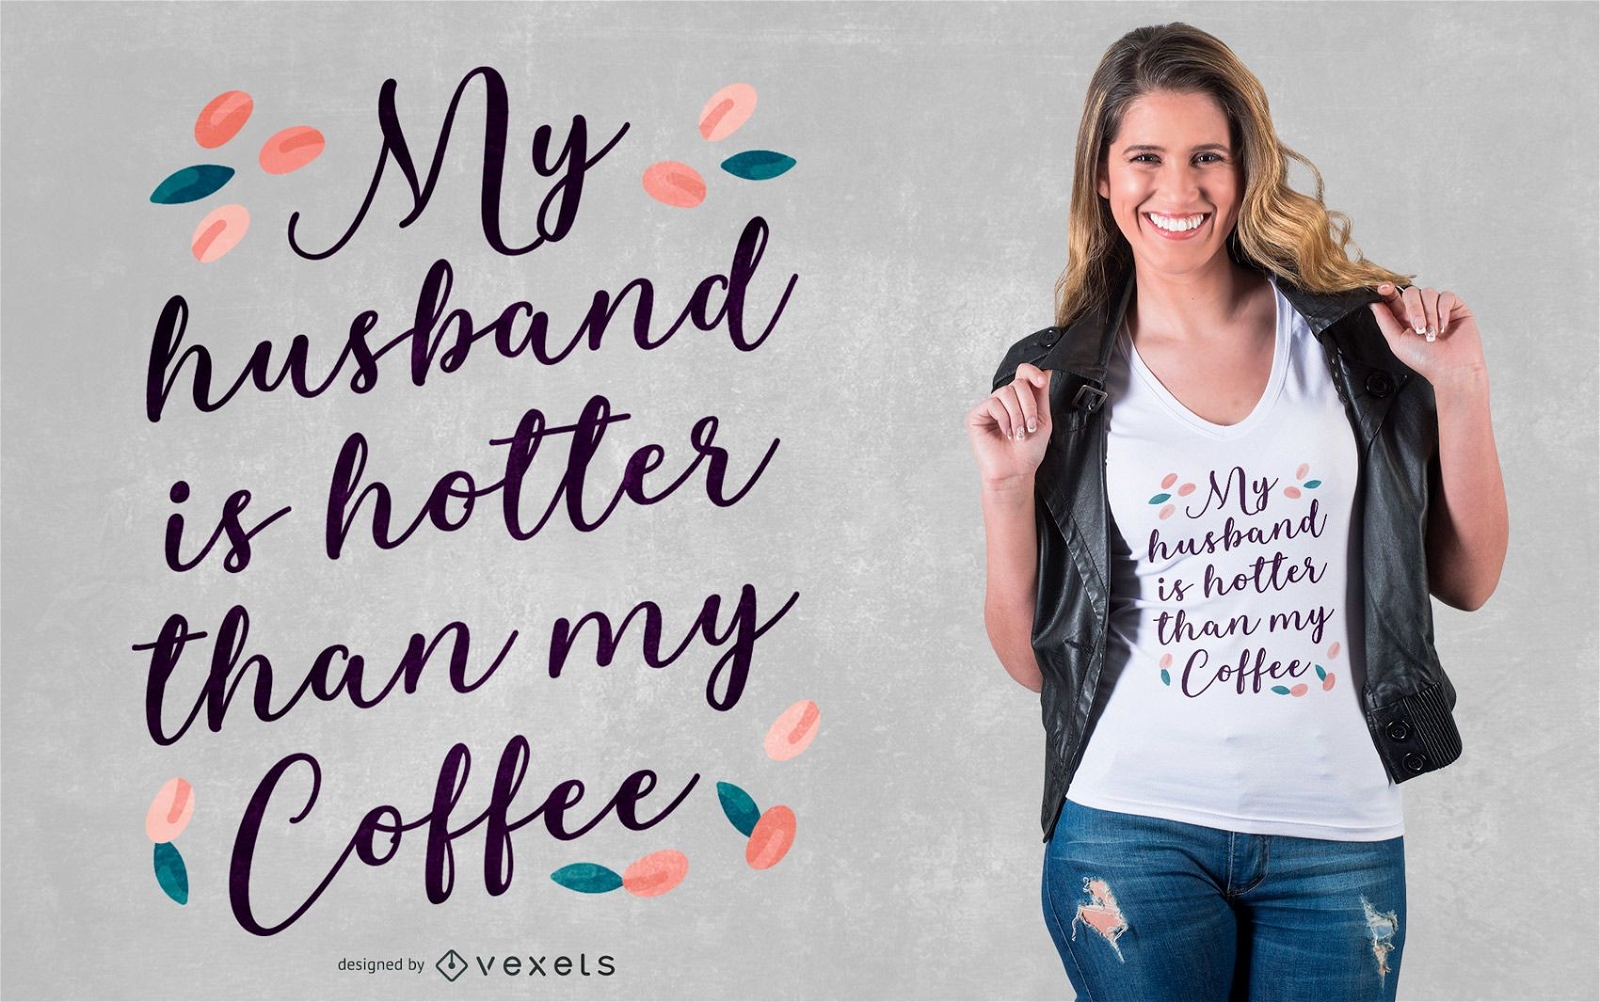 Husband coffee t-shirt design